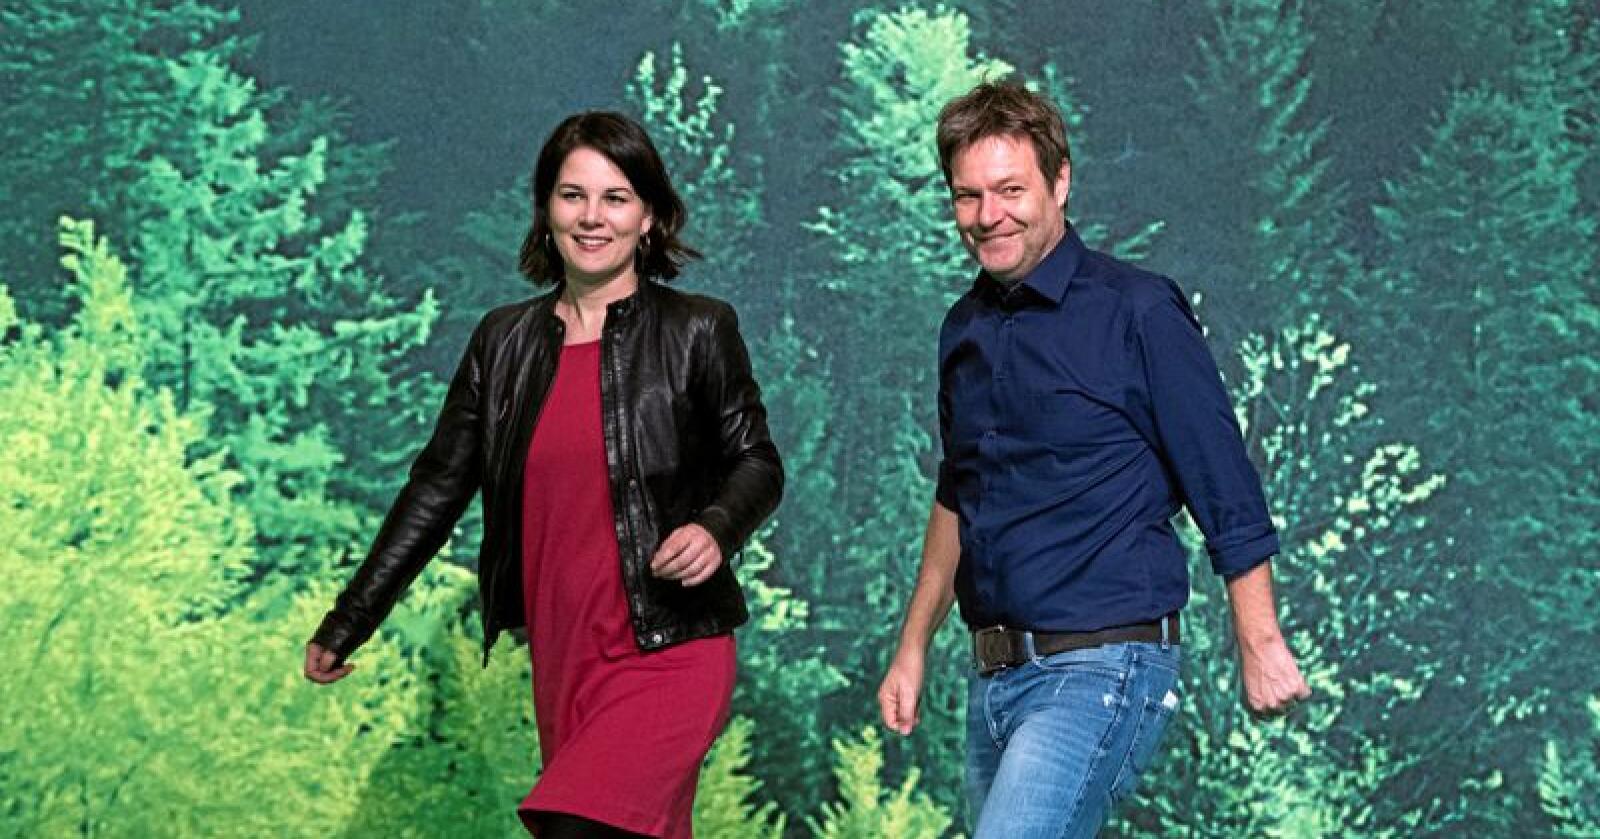 Medvind for grønt parti: Det går litt under radaren at De Grønne i Tyskland vokser under ledelse av Robert Habeck og Annalena Baerbock. Foto: Bernd von Jutrczenka / dpa via AP / NTB Scanpix